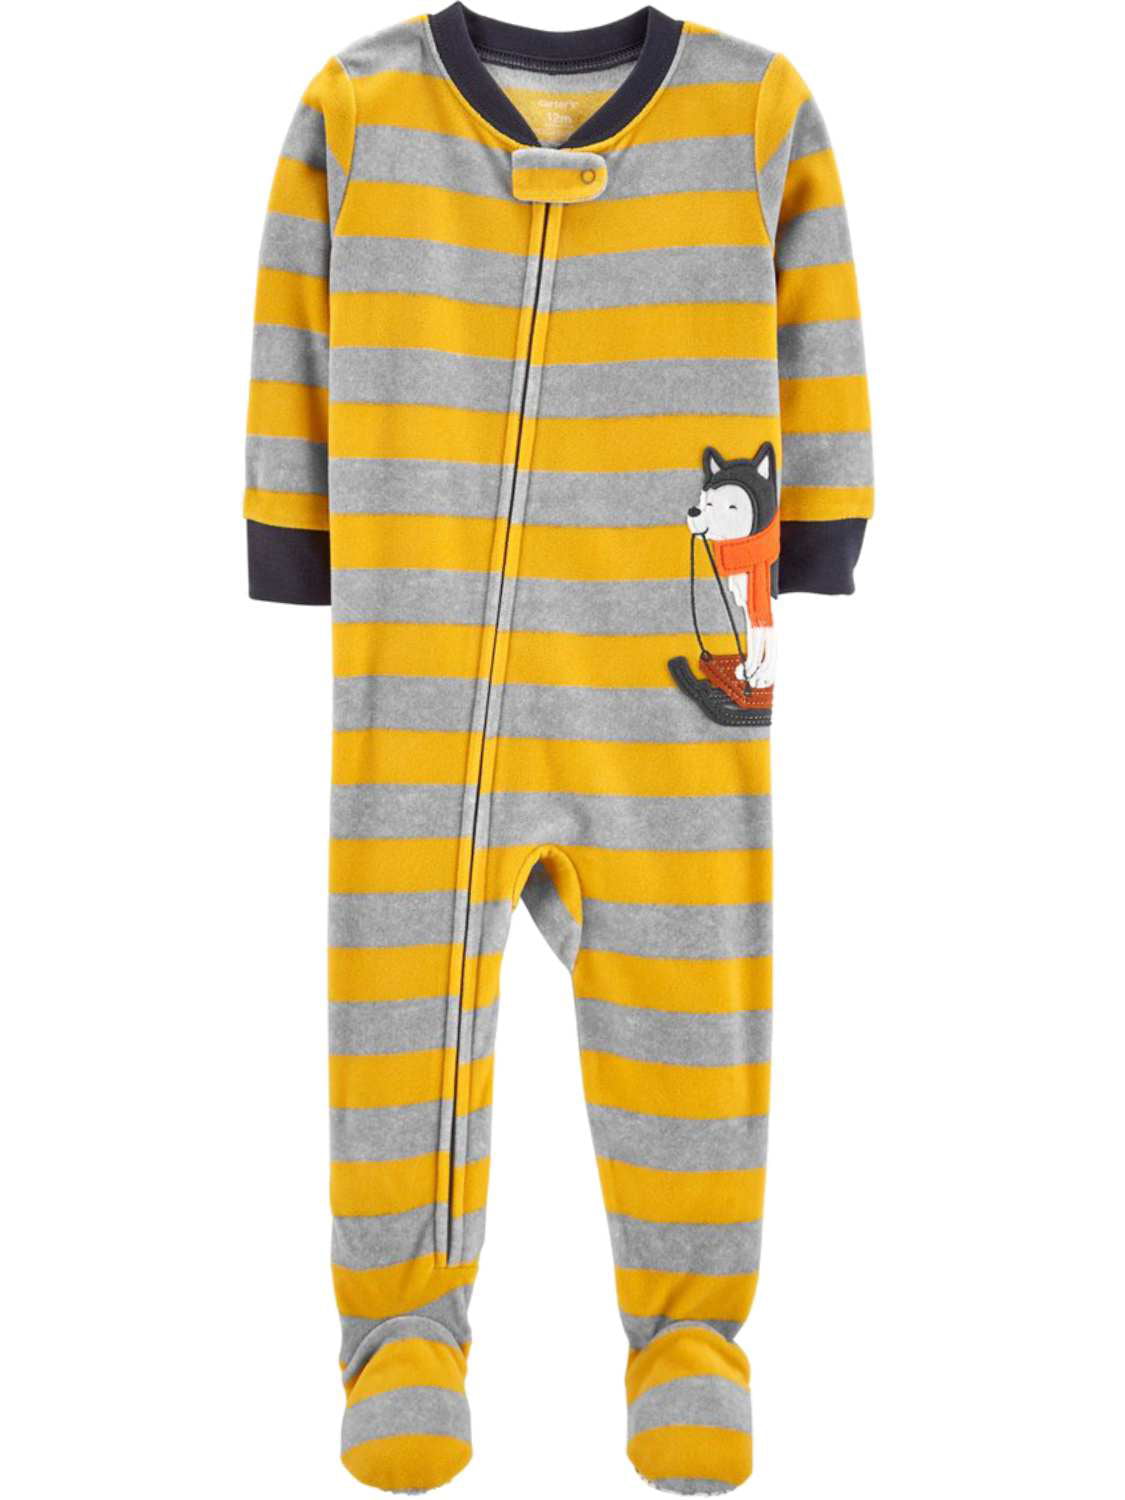 CARTERS Boys Size 3T Striped Puppy Dog Fleece Footed Pajama Sleeper